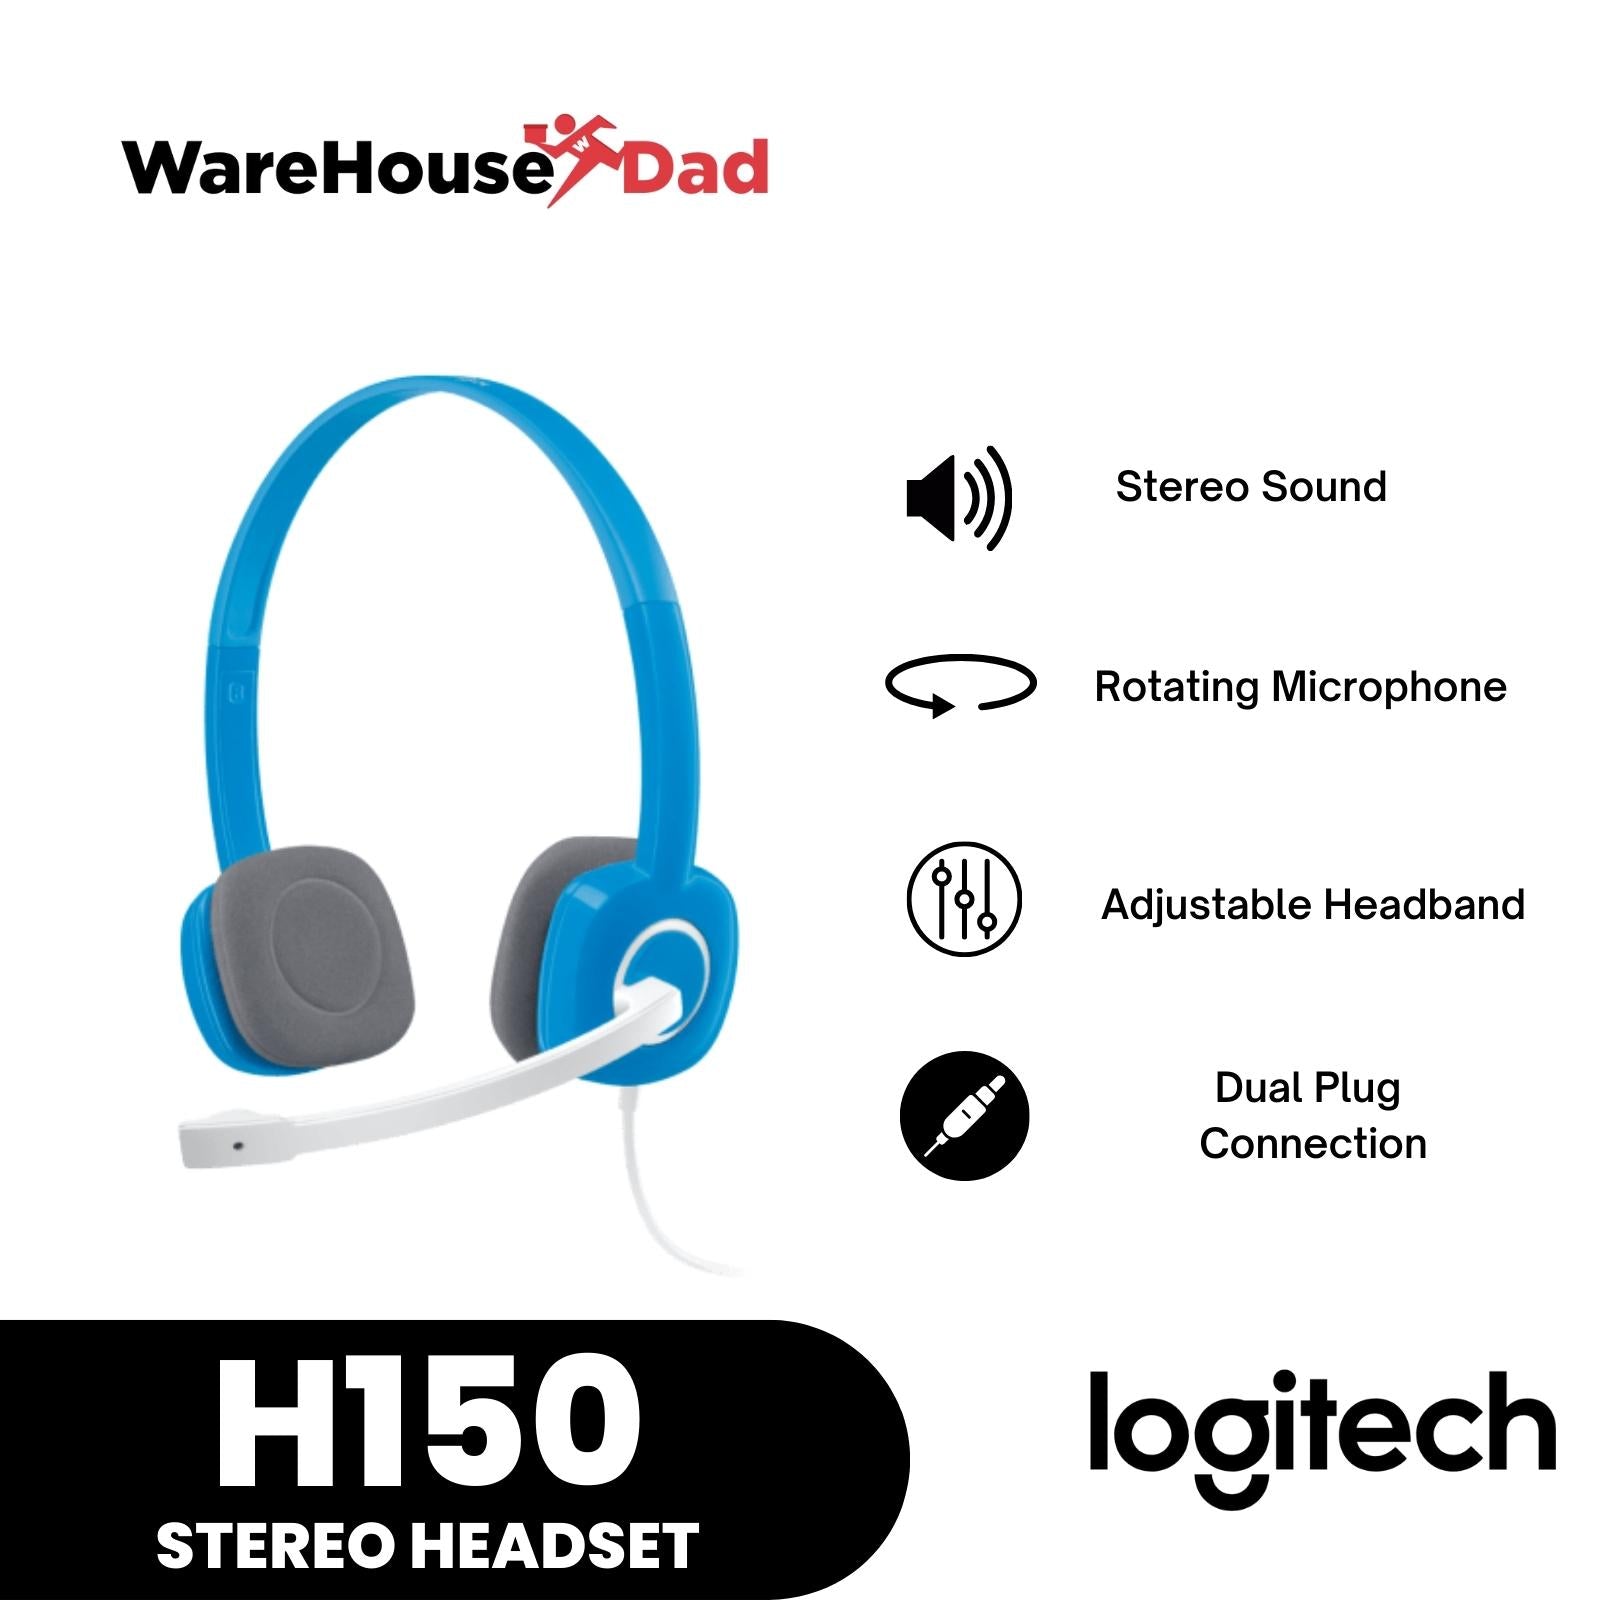 Logitech H150 Stereo Headset – WarehouseDad